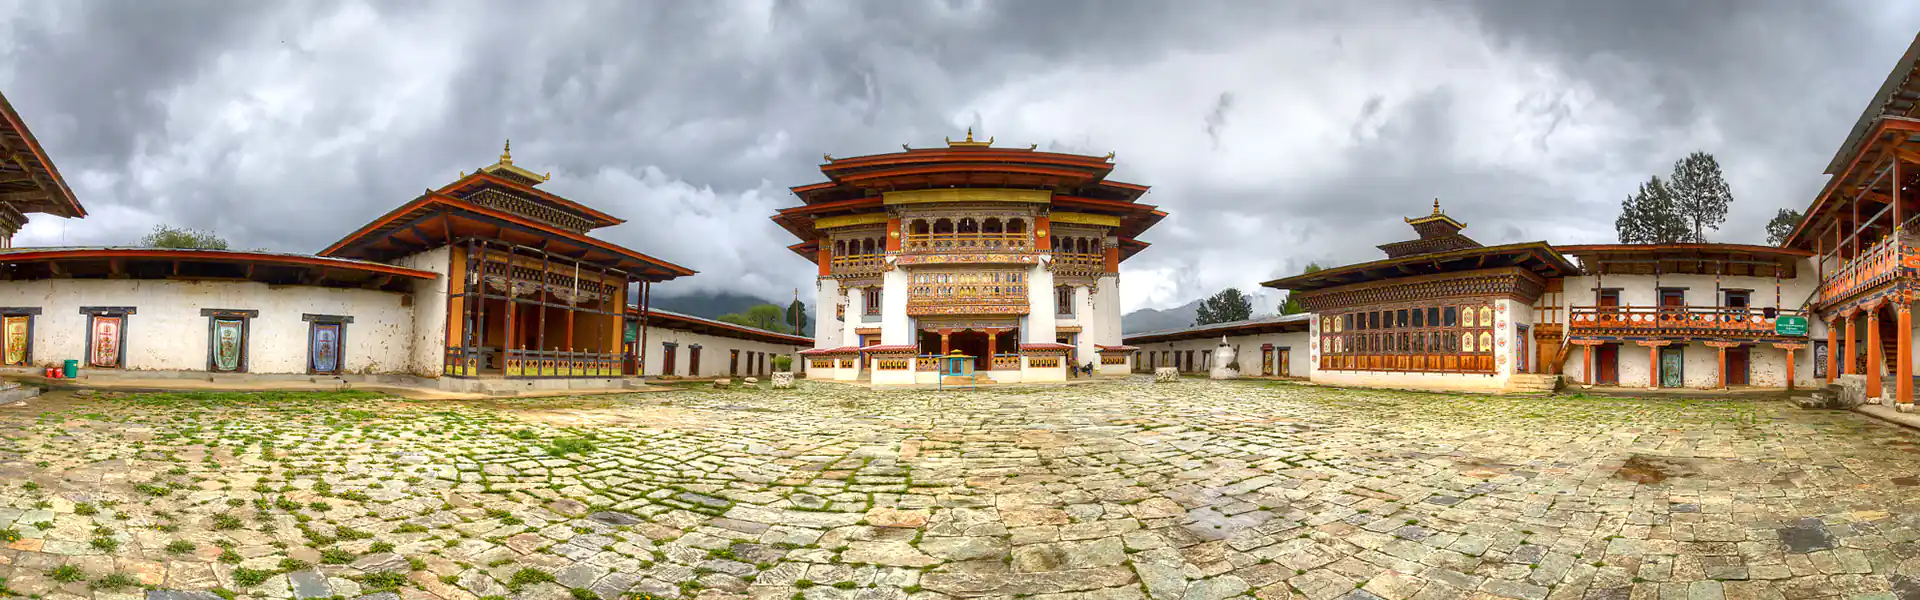 Gangtey Monastery – Phobjikha Valley of Bhutan